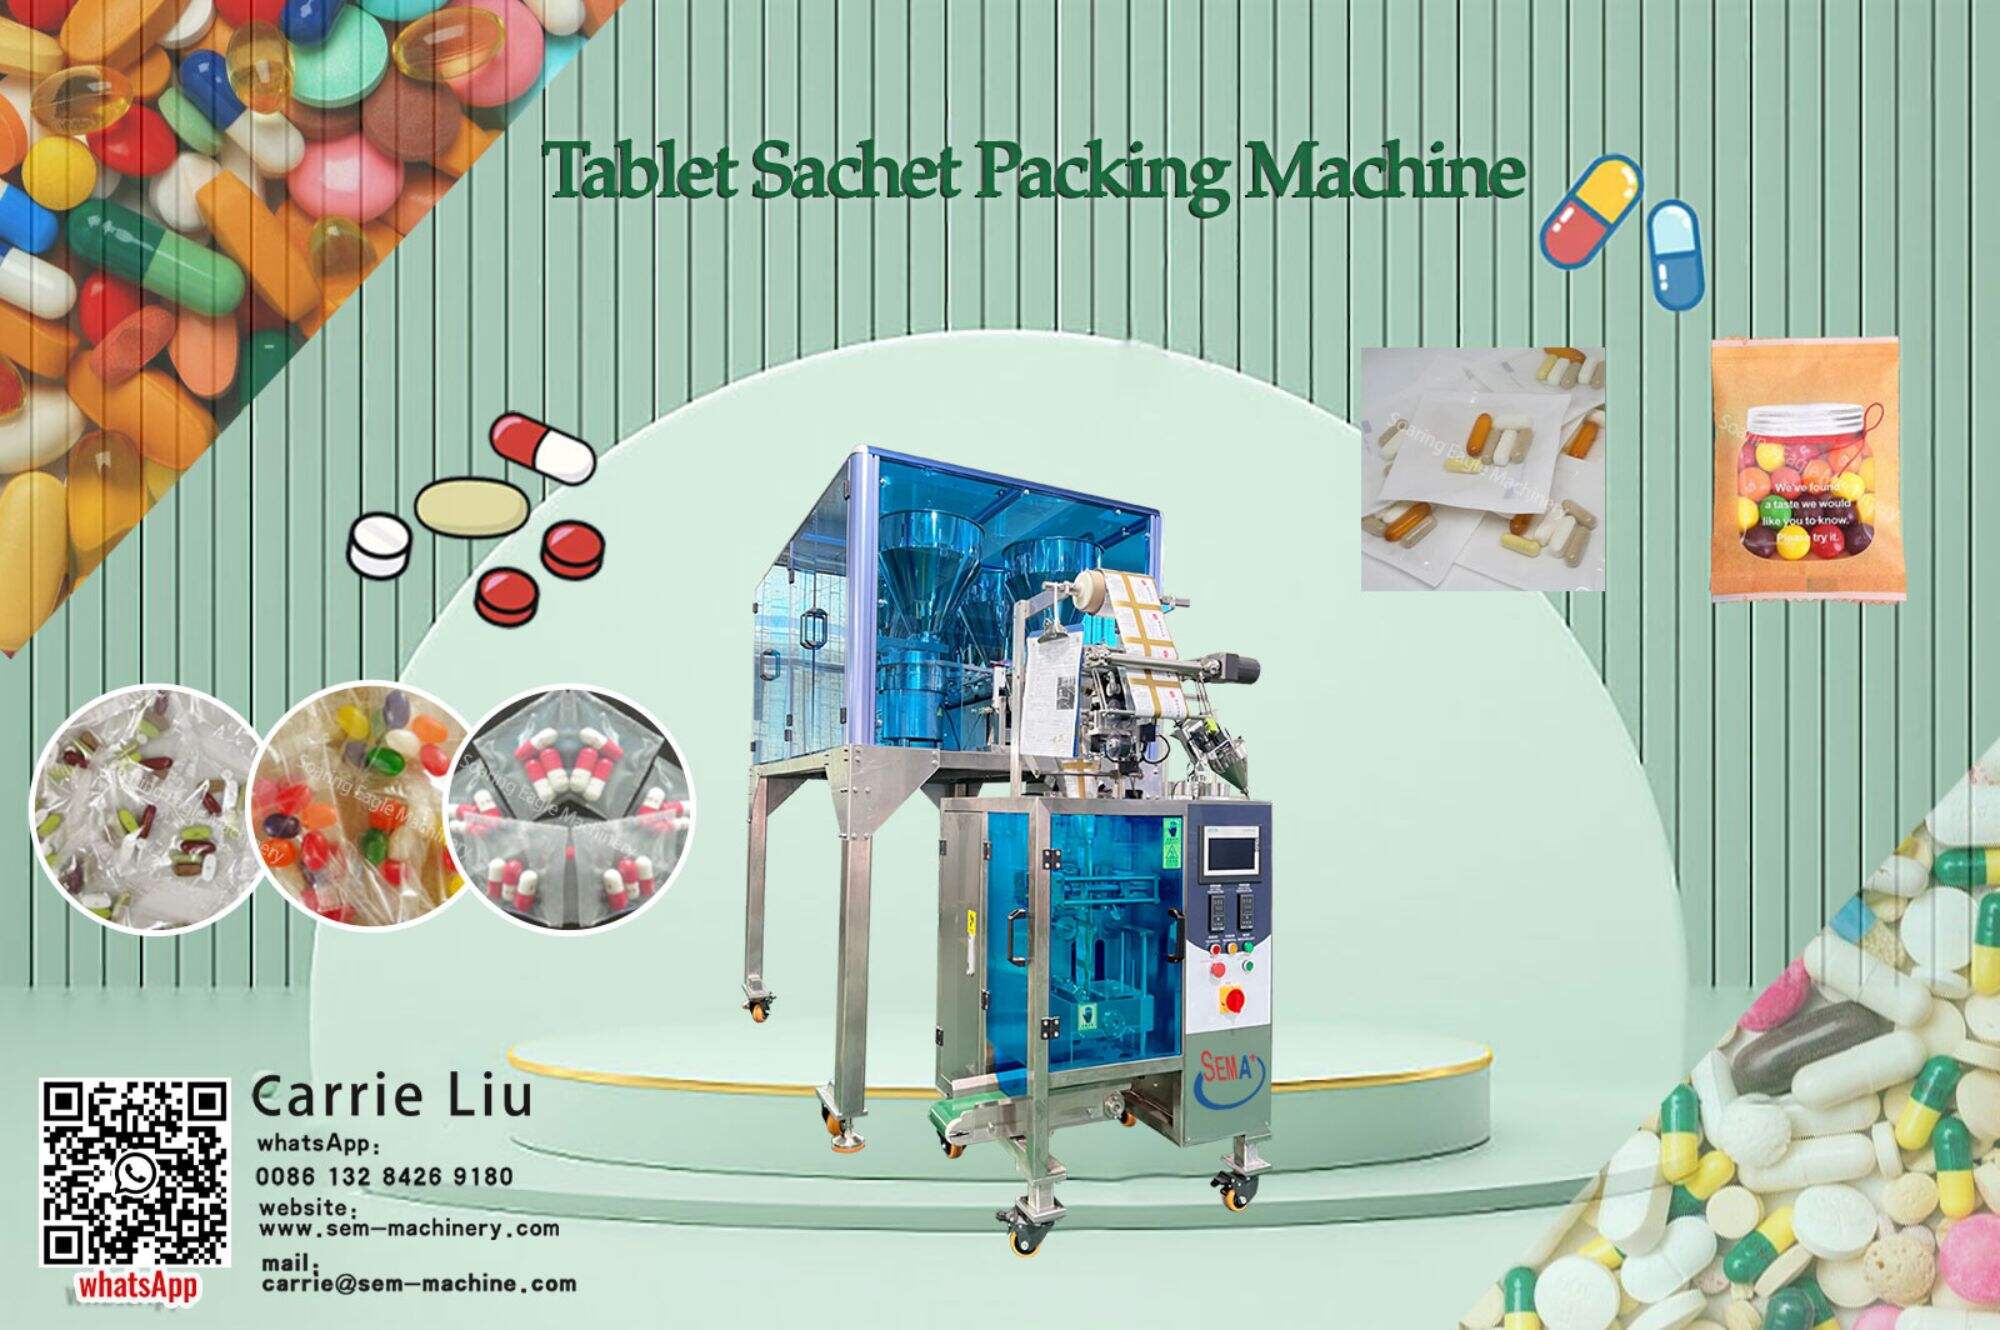 Multifunction tablet sachet packing machine 